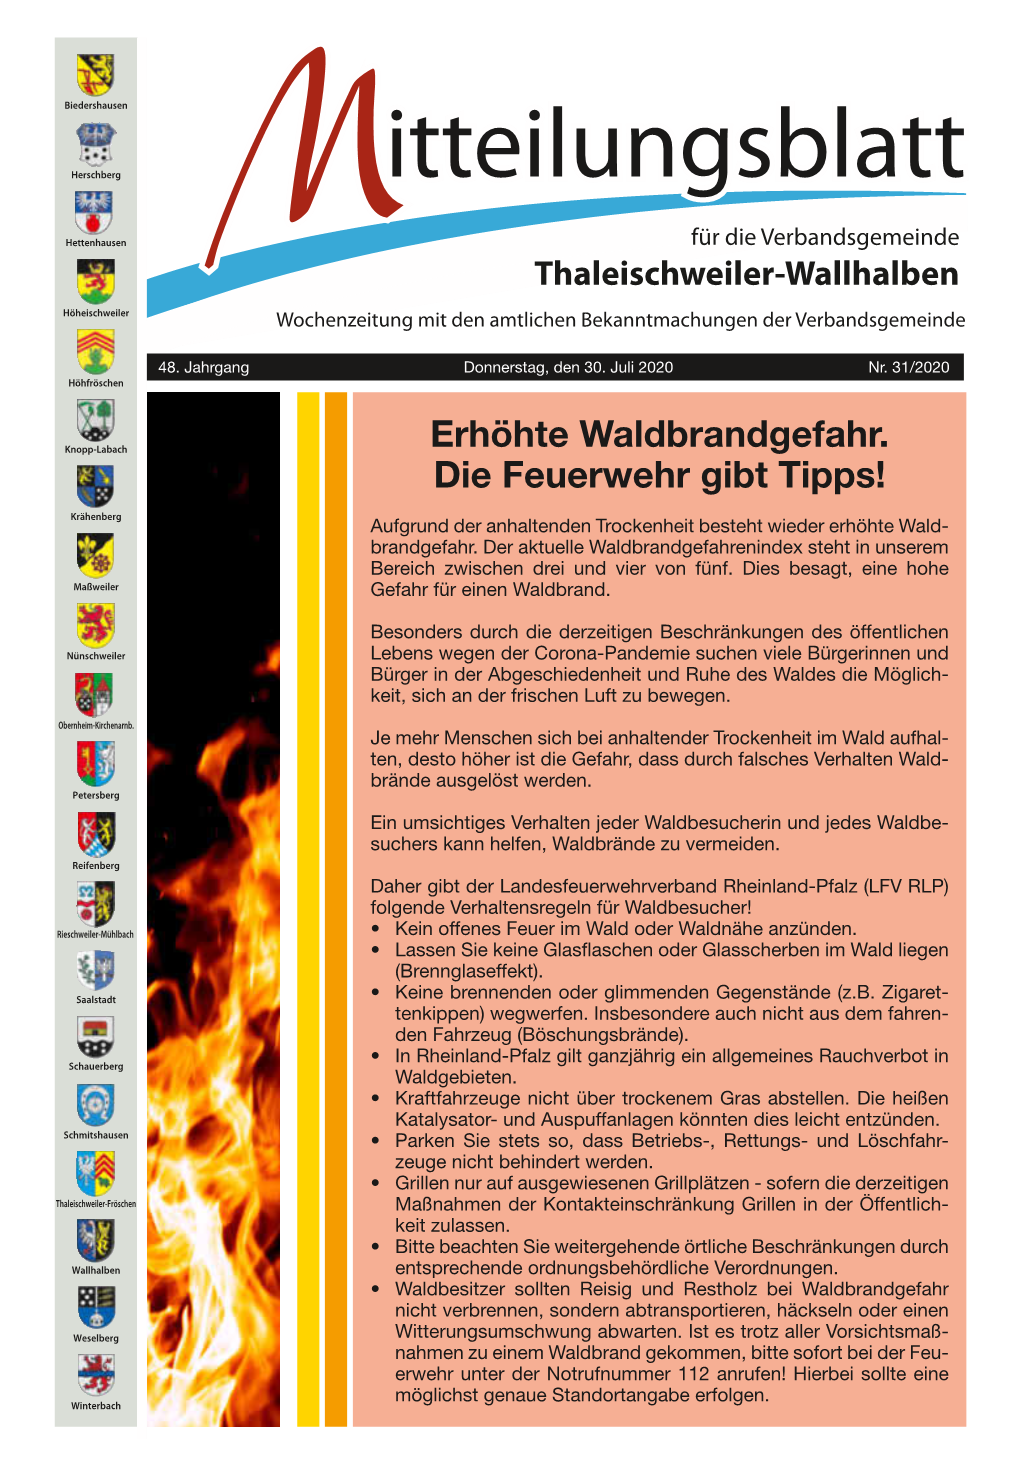 Itteilungsblatt